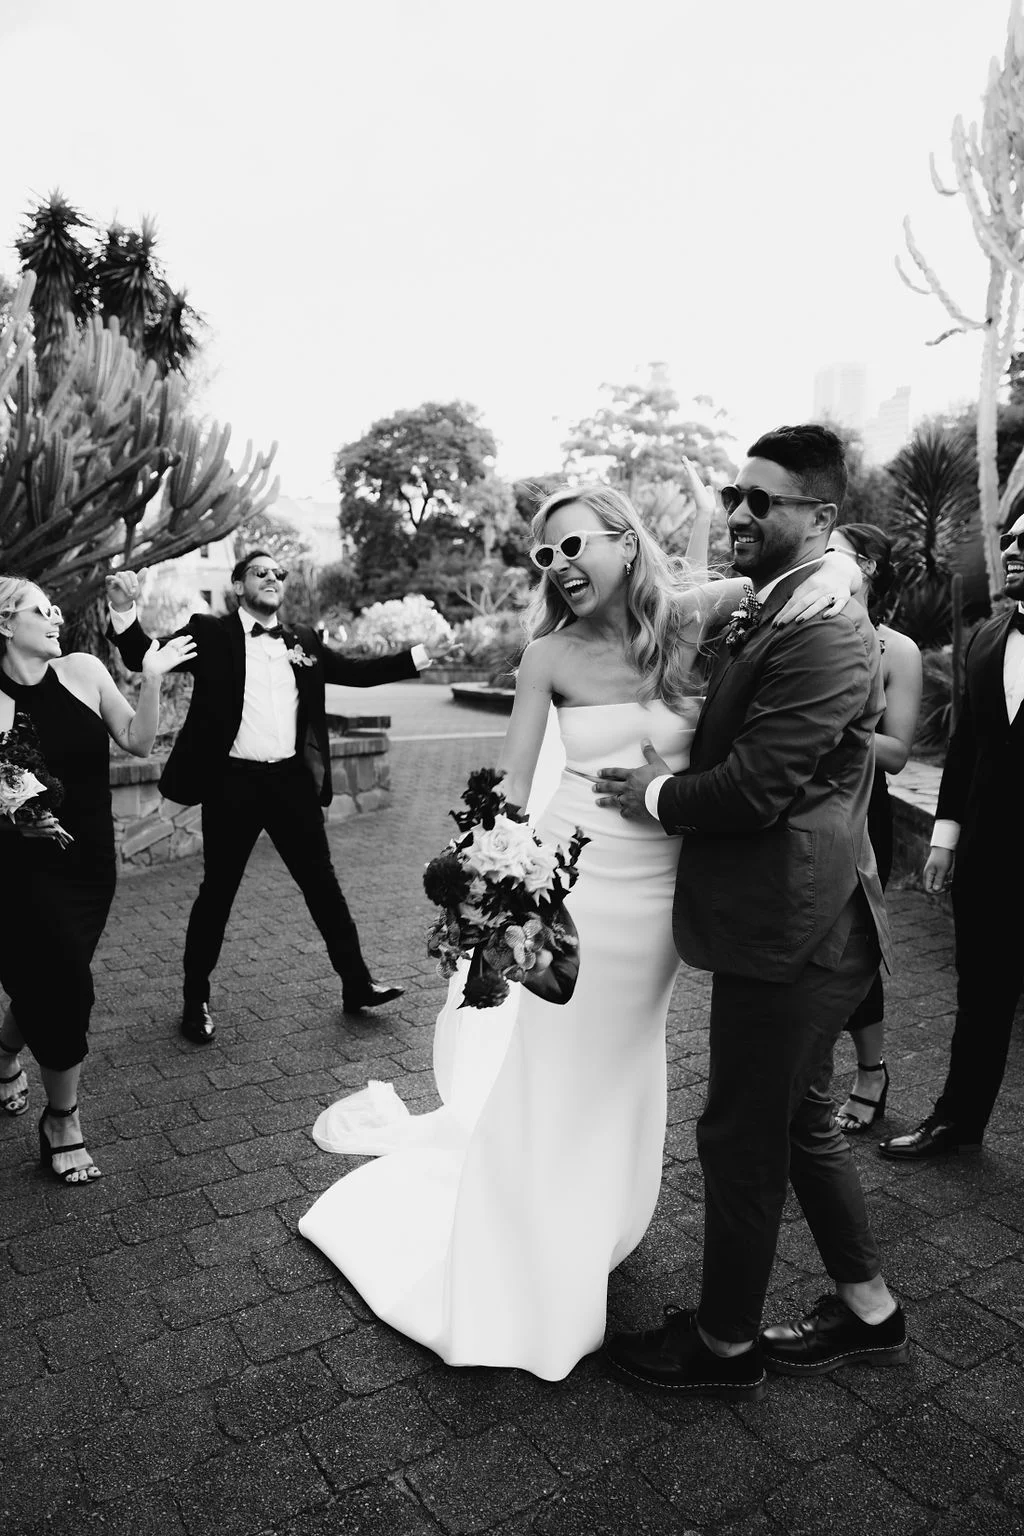 mary cherry photography sydney weddings